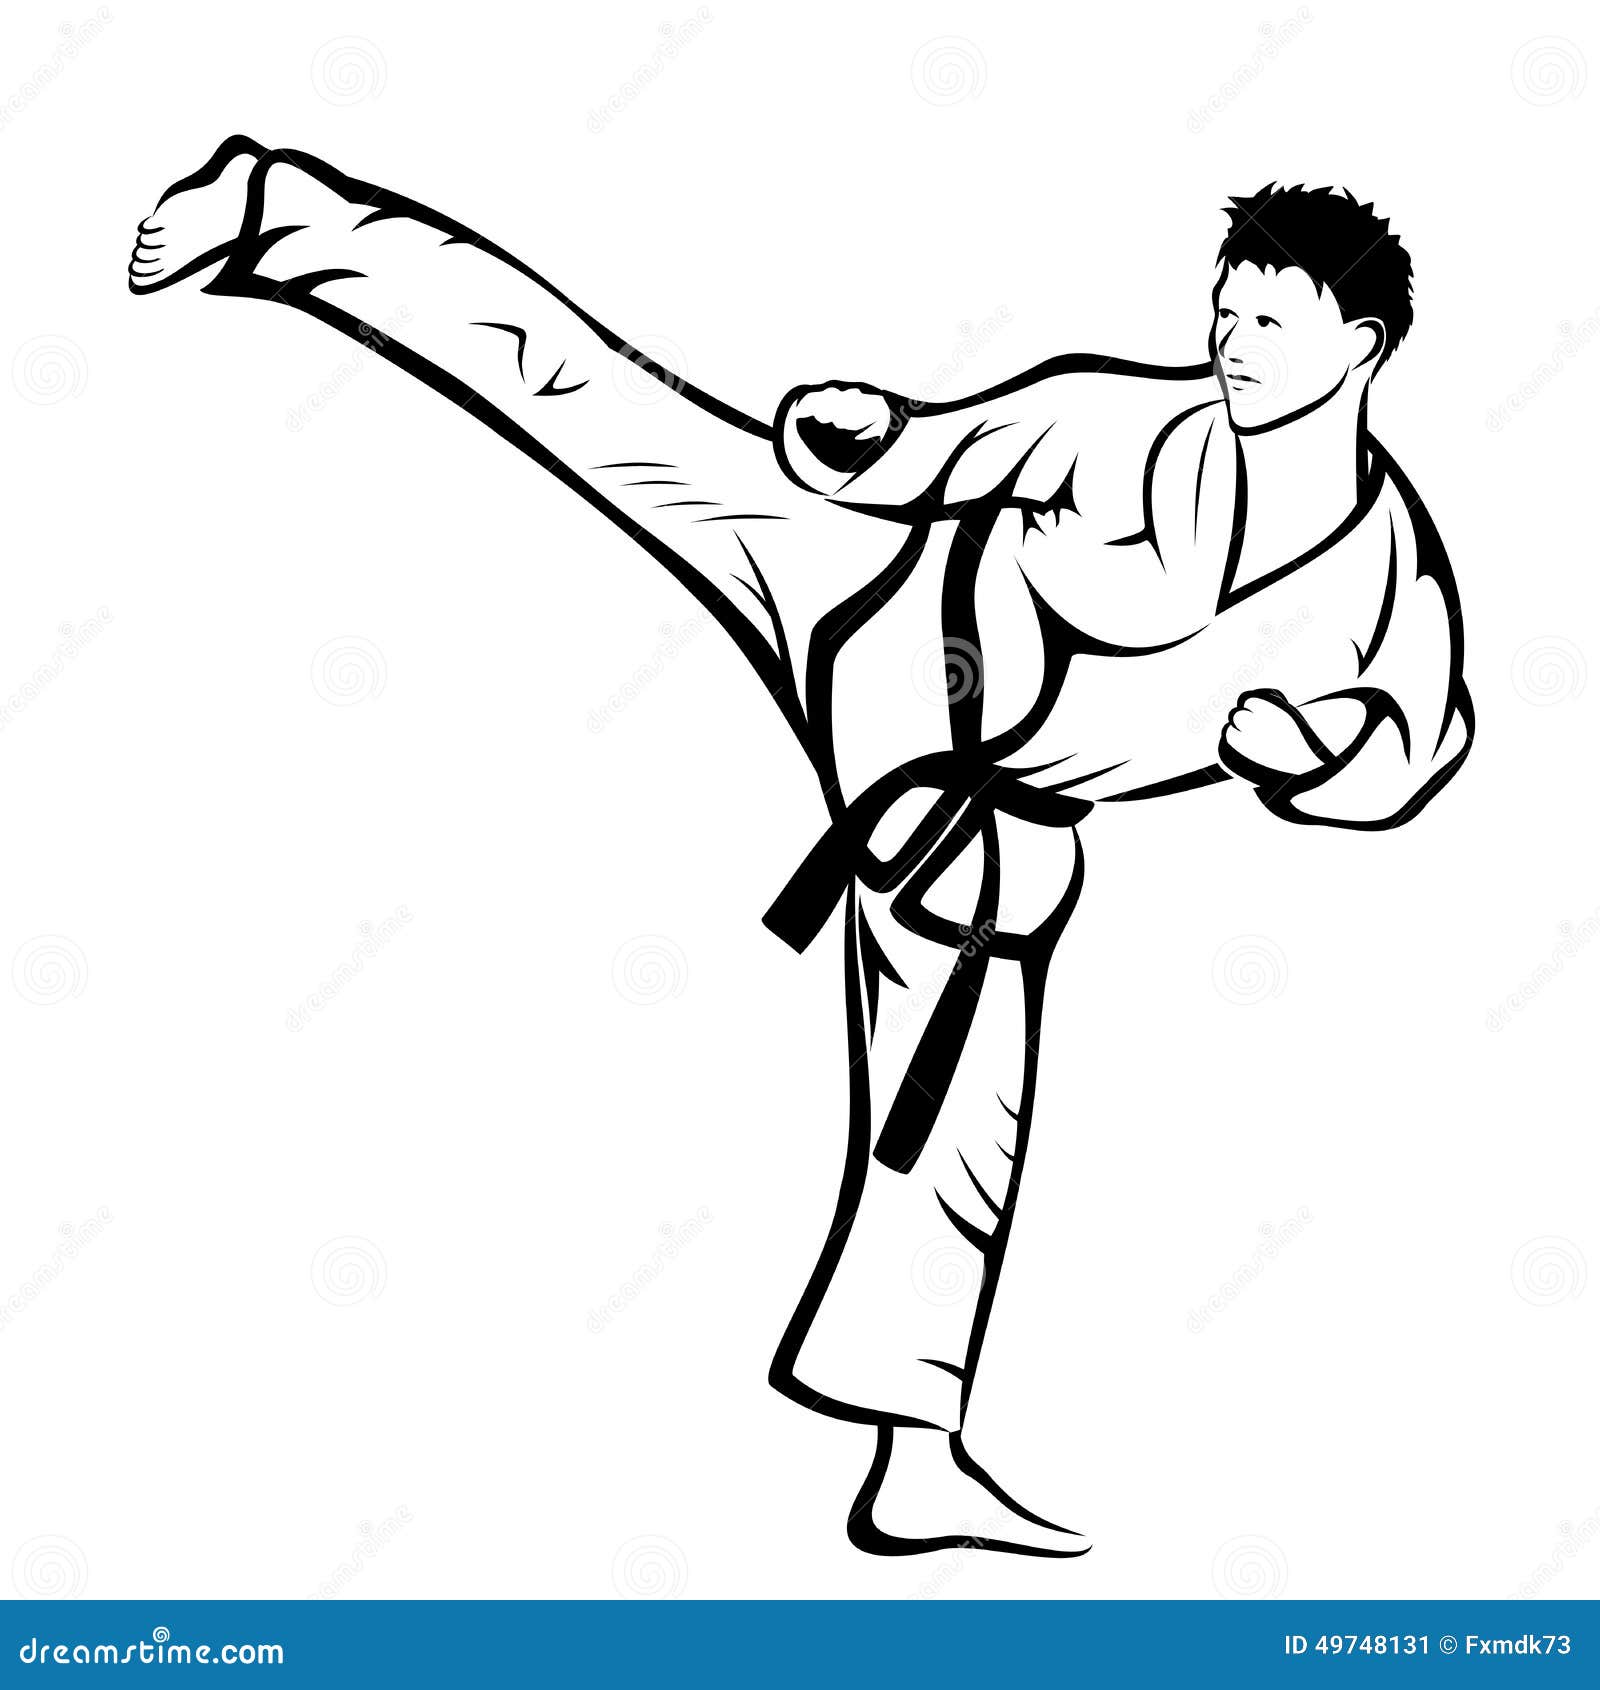 Karate Kick Stock Vector - Image: 49748131